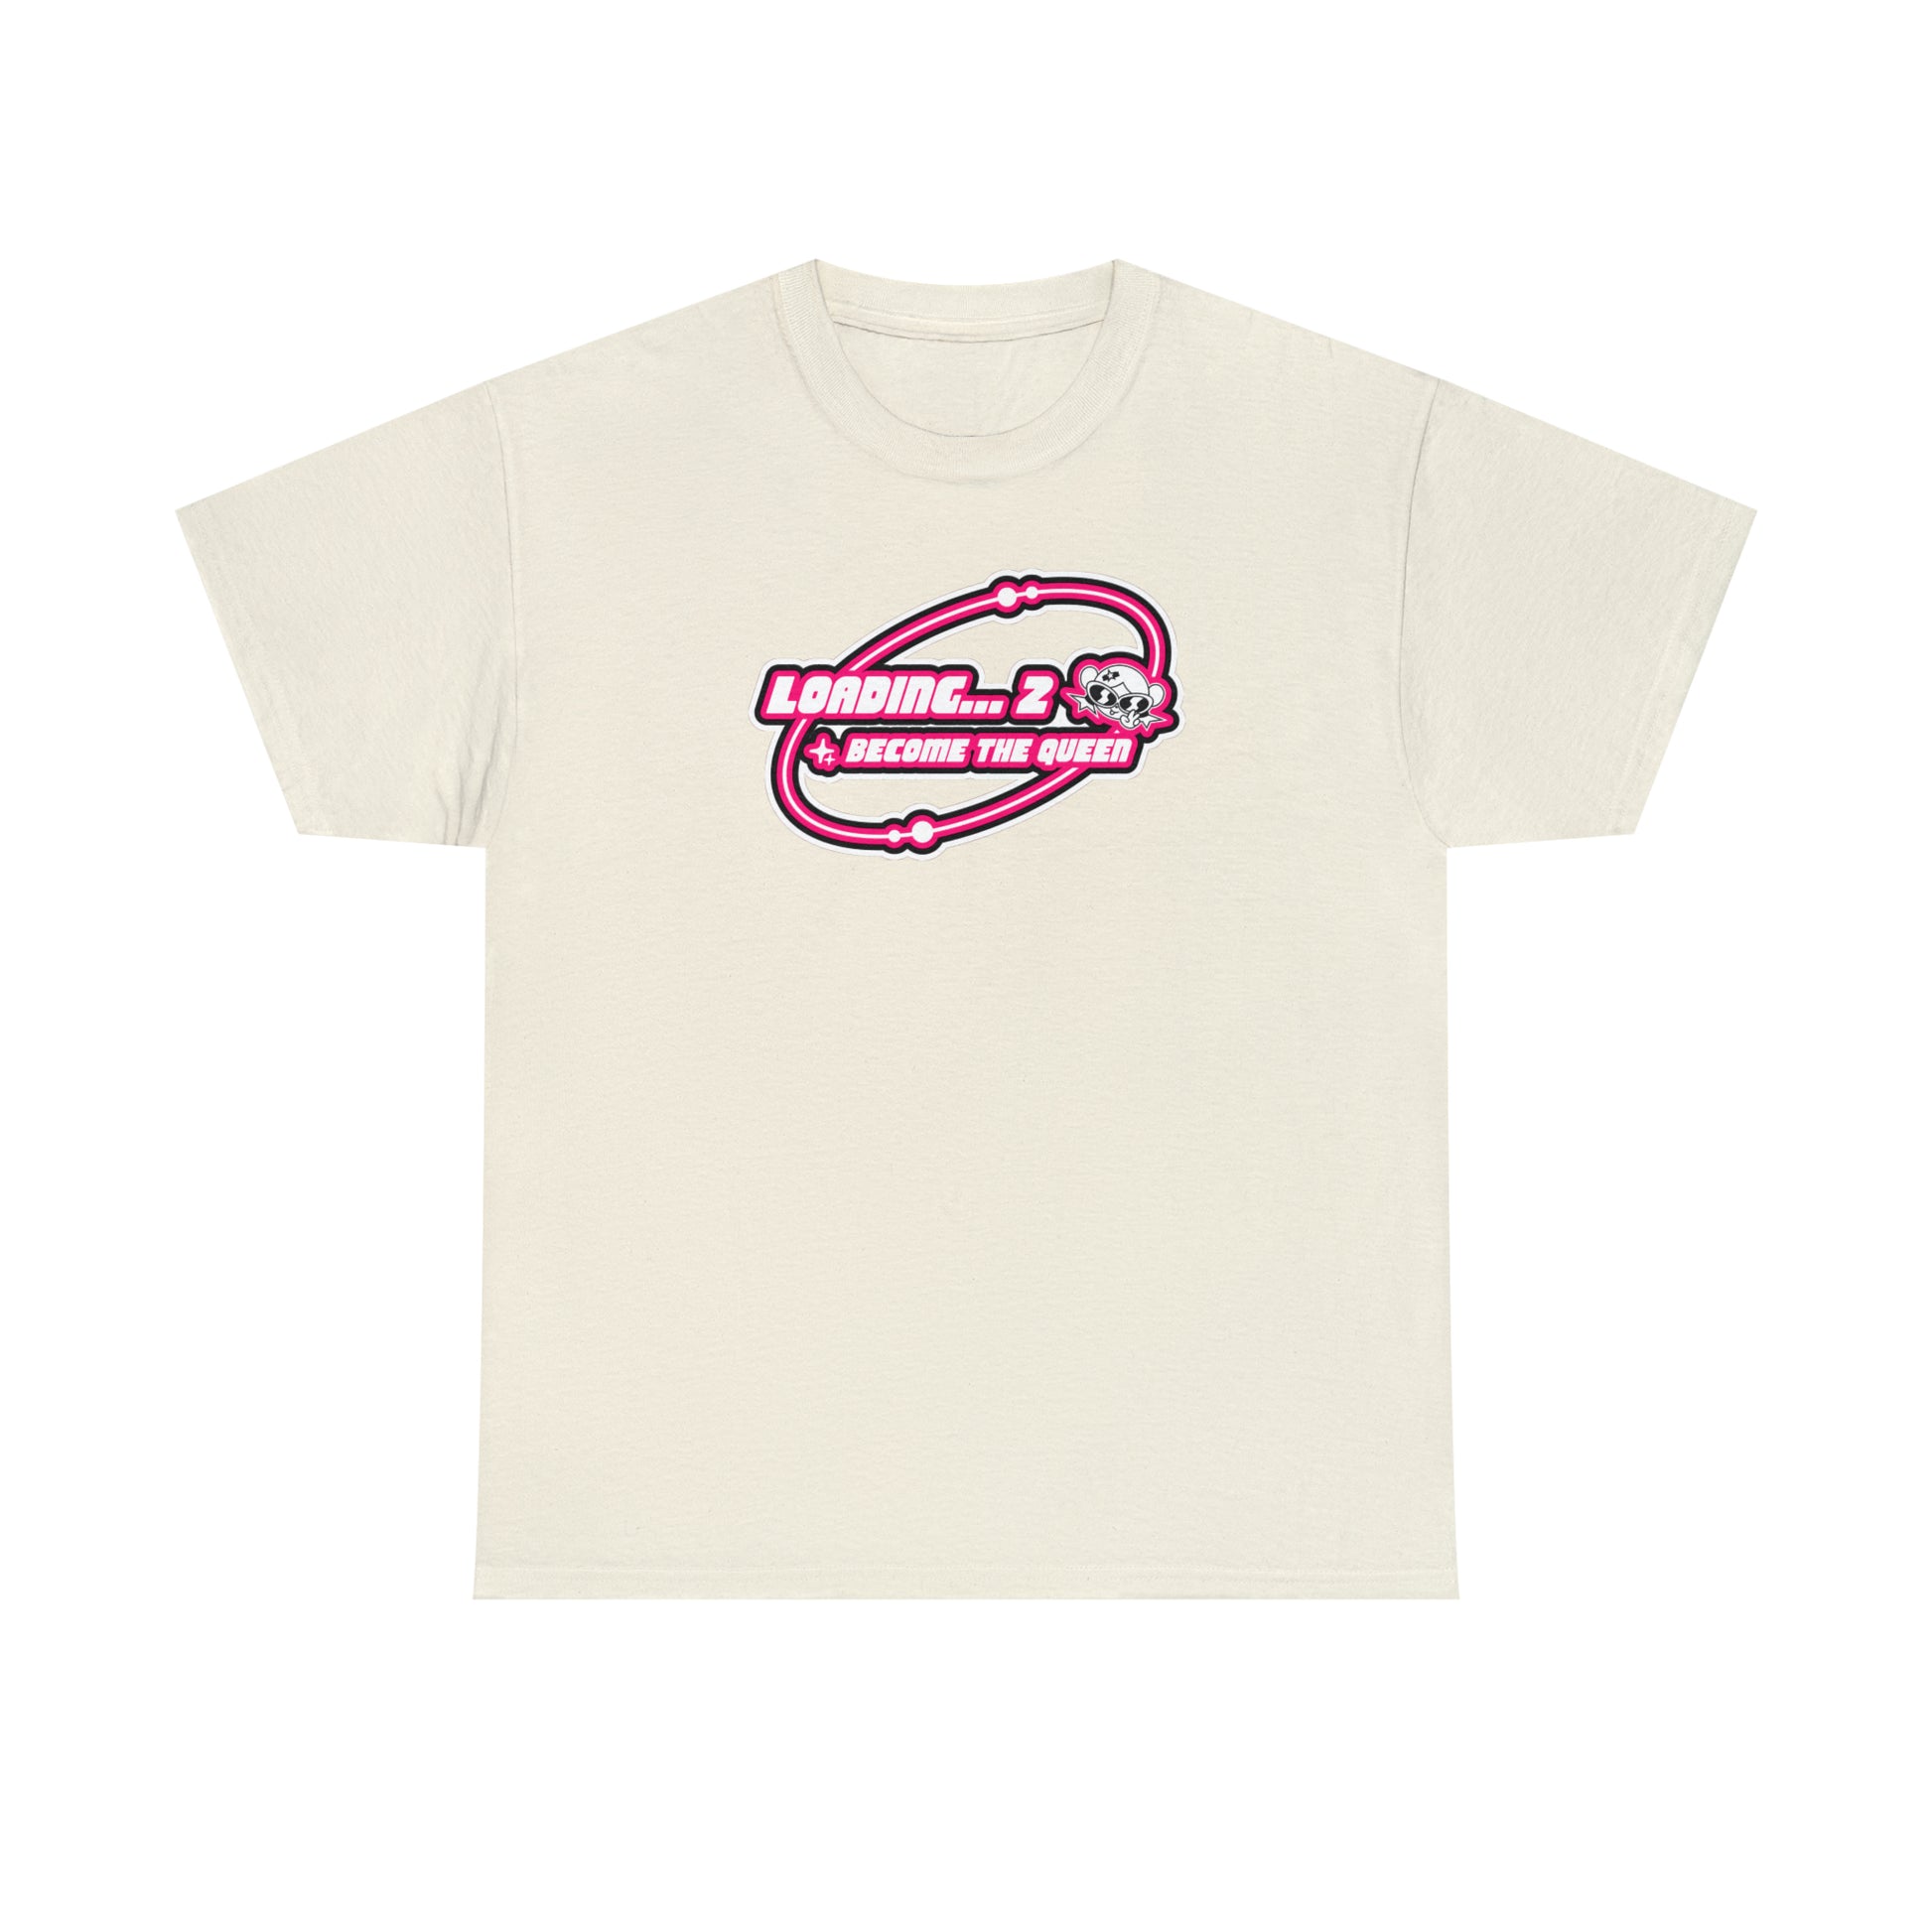 Y2K shirt  |  Y2K Clothing  |  Y2K Fashion shirt  |  Loading shirt  |  Streetwear shirt | Unisex shirt -  L2KBoutique